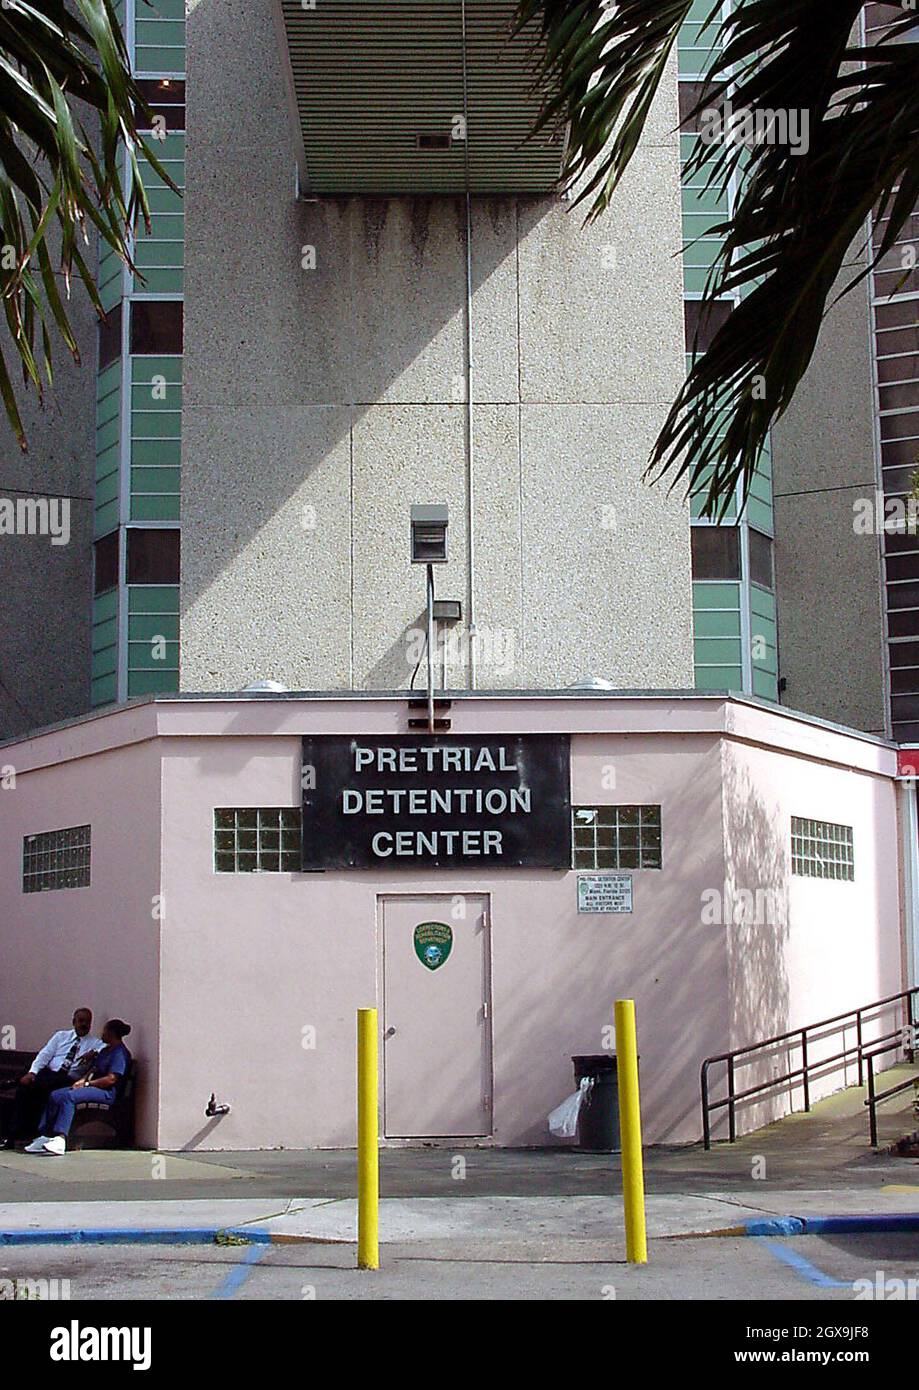 Miami Pretrial Detention Center Where Fransisco Montez Is Being Held